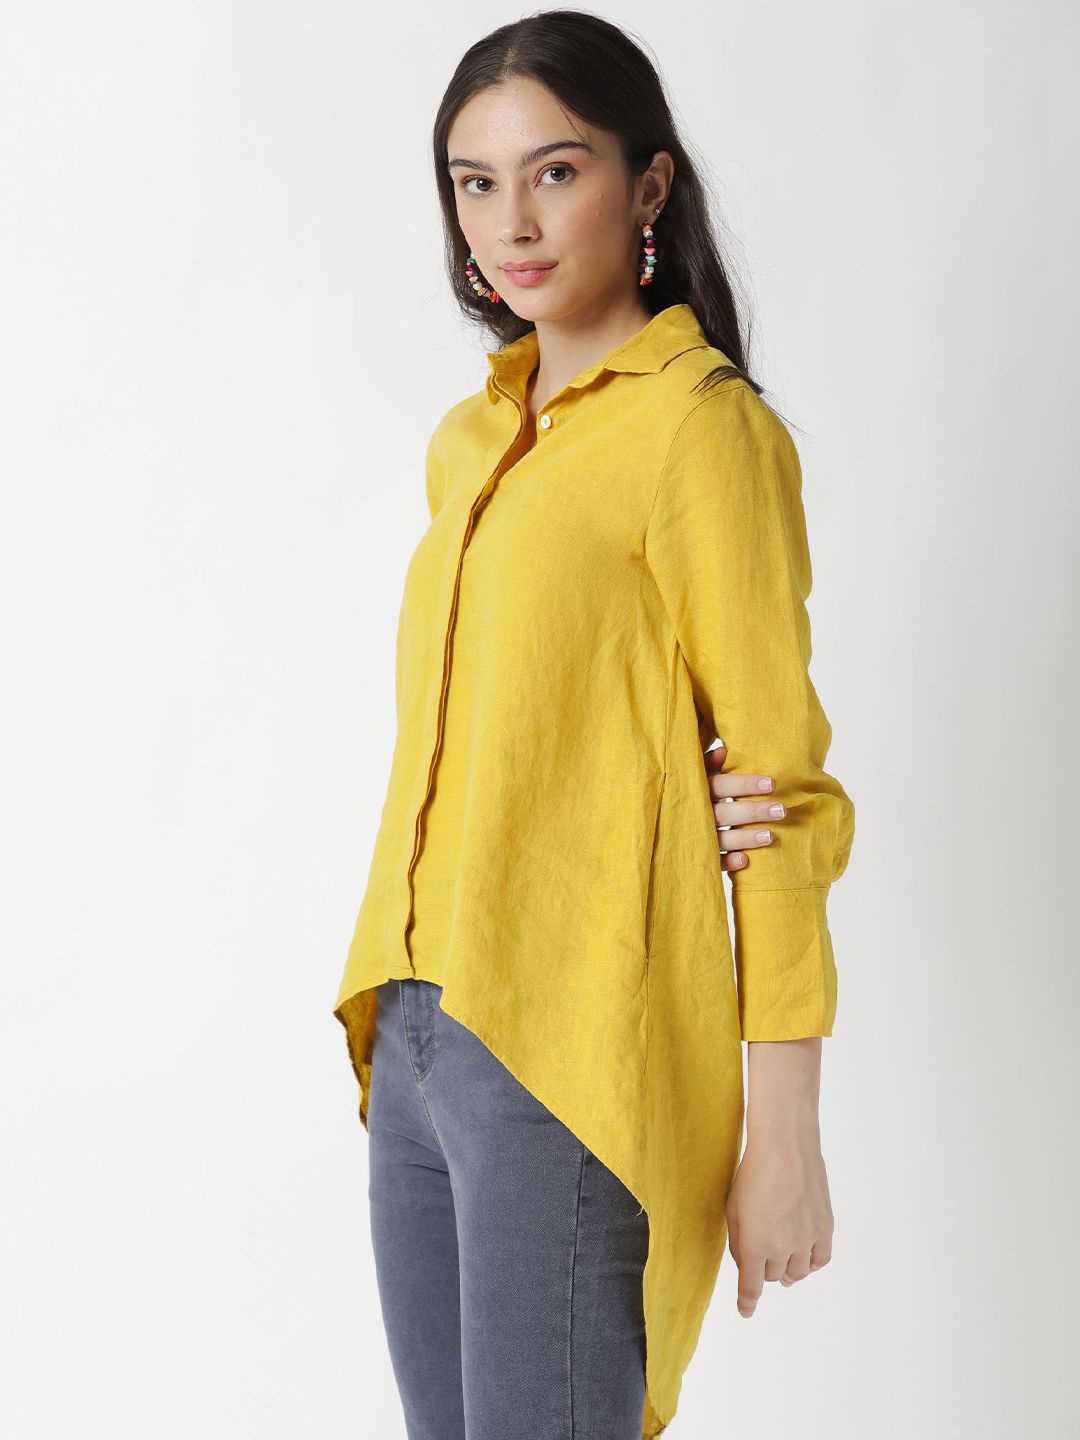 RAREISM Women Yellow Linen Shirt Style Top Price in India